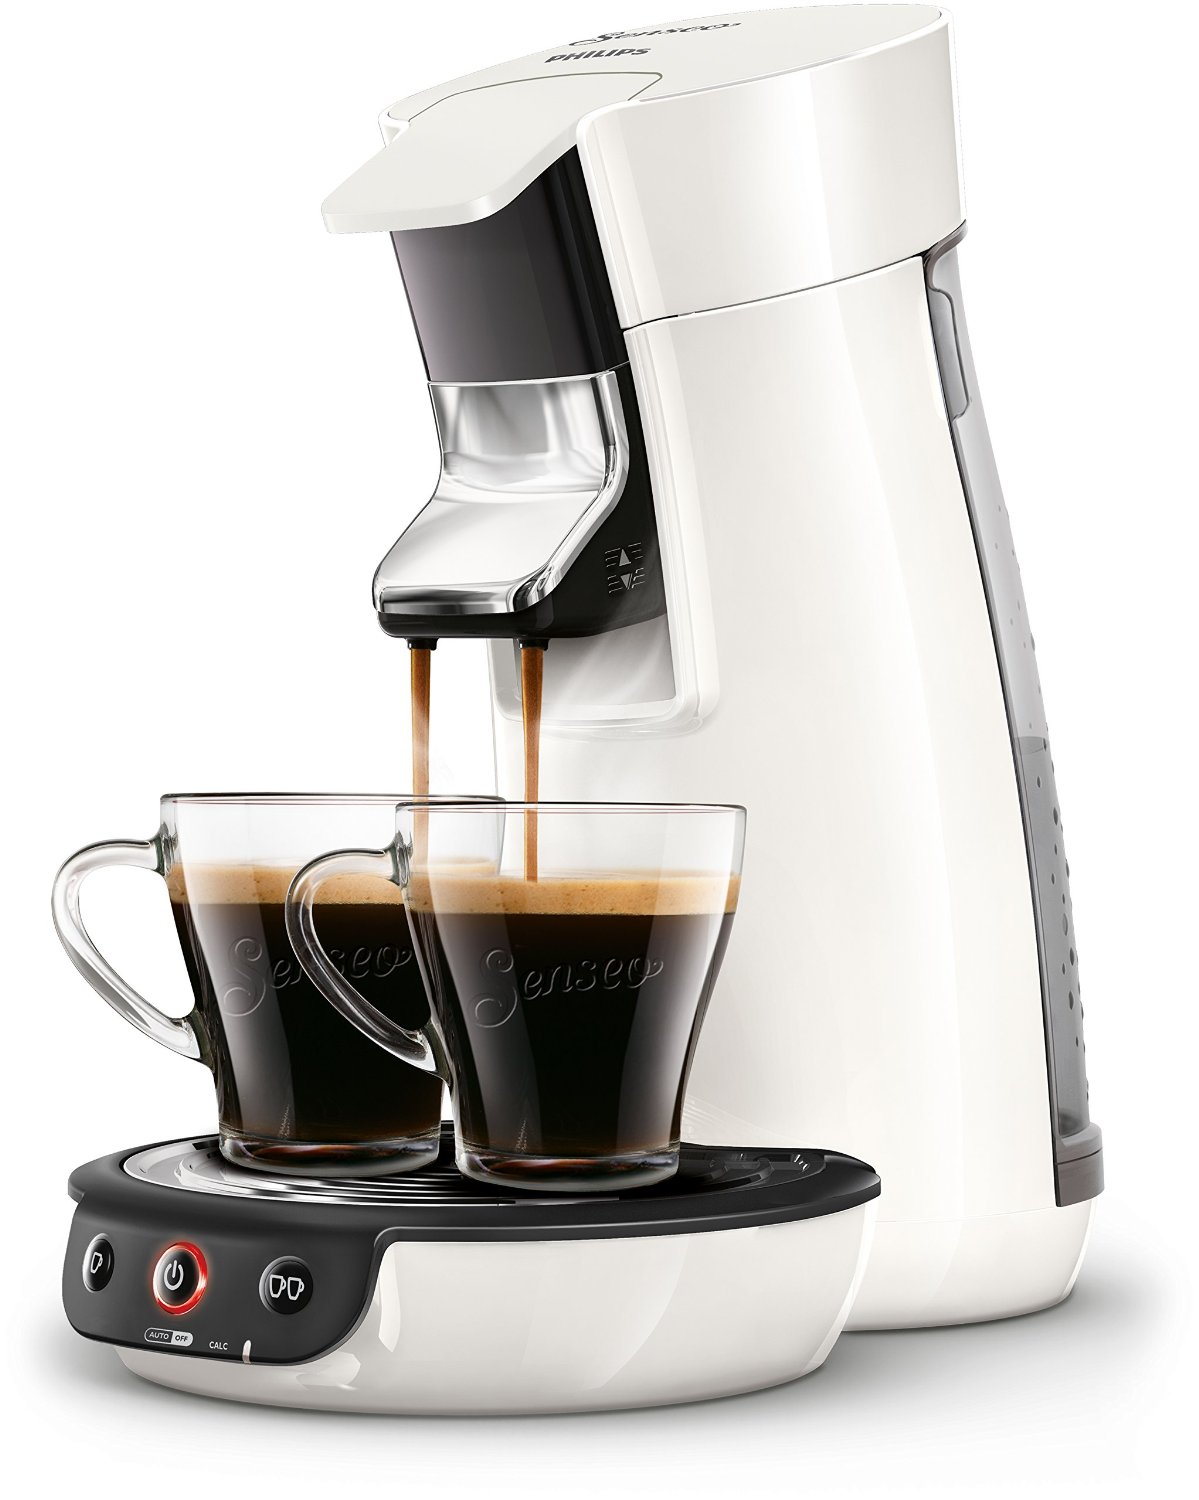 Senseo kaffeepadmaschine